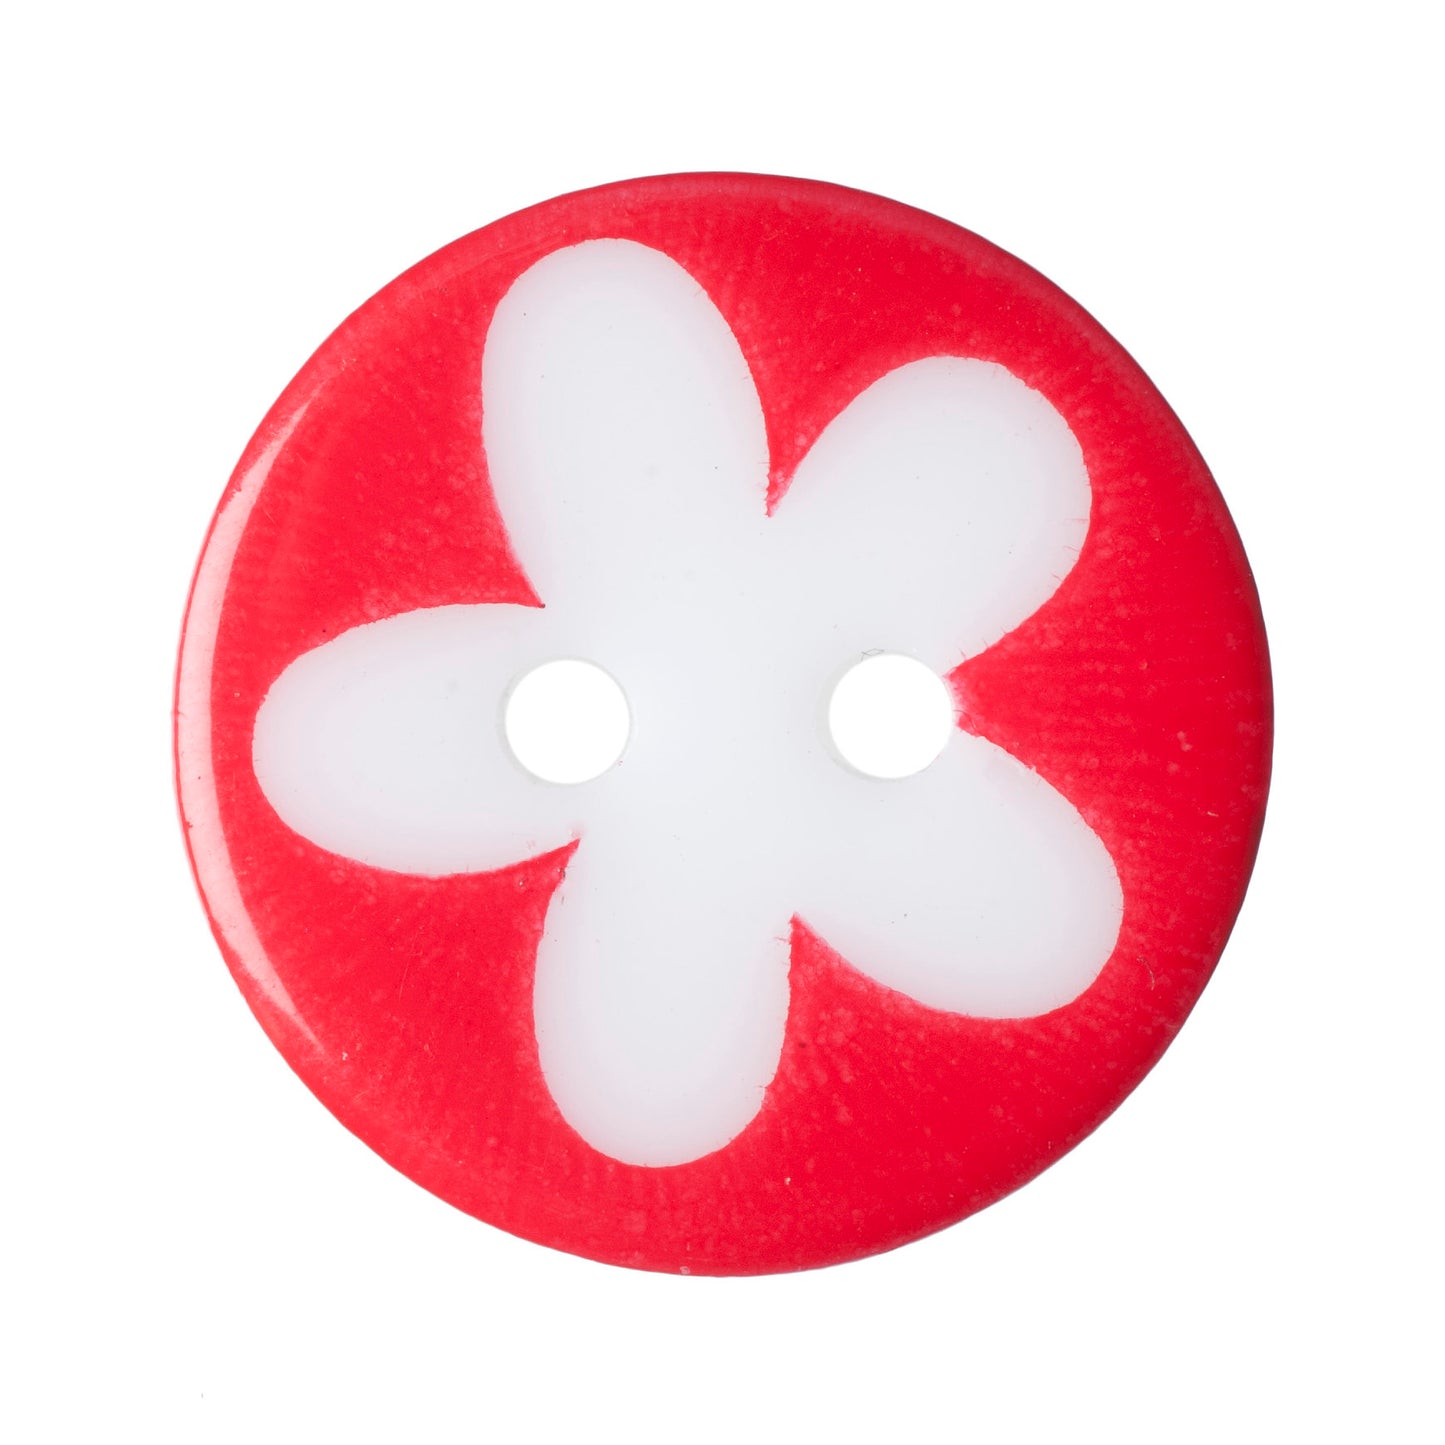 Flower Design 2 Hole Button - 17mm - Red [LD10.6]